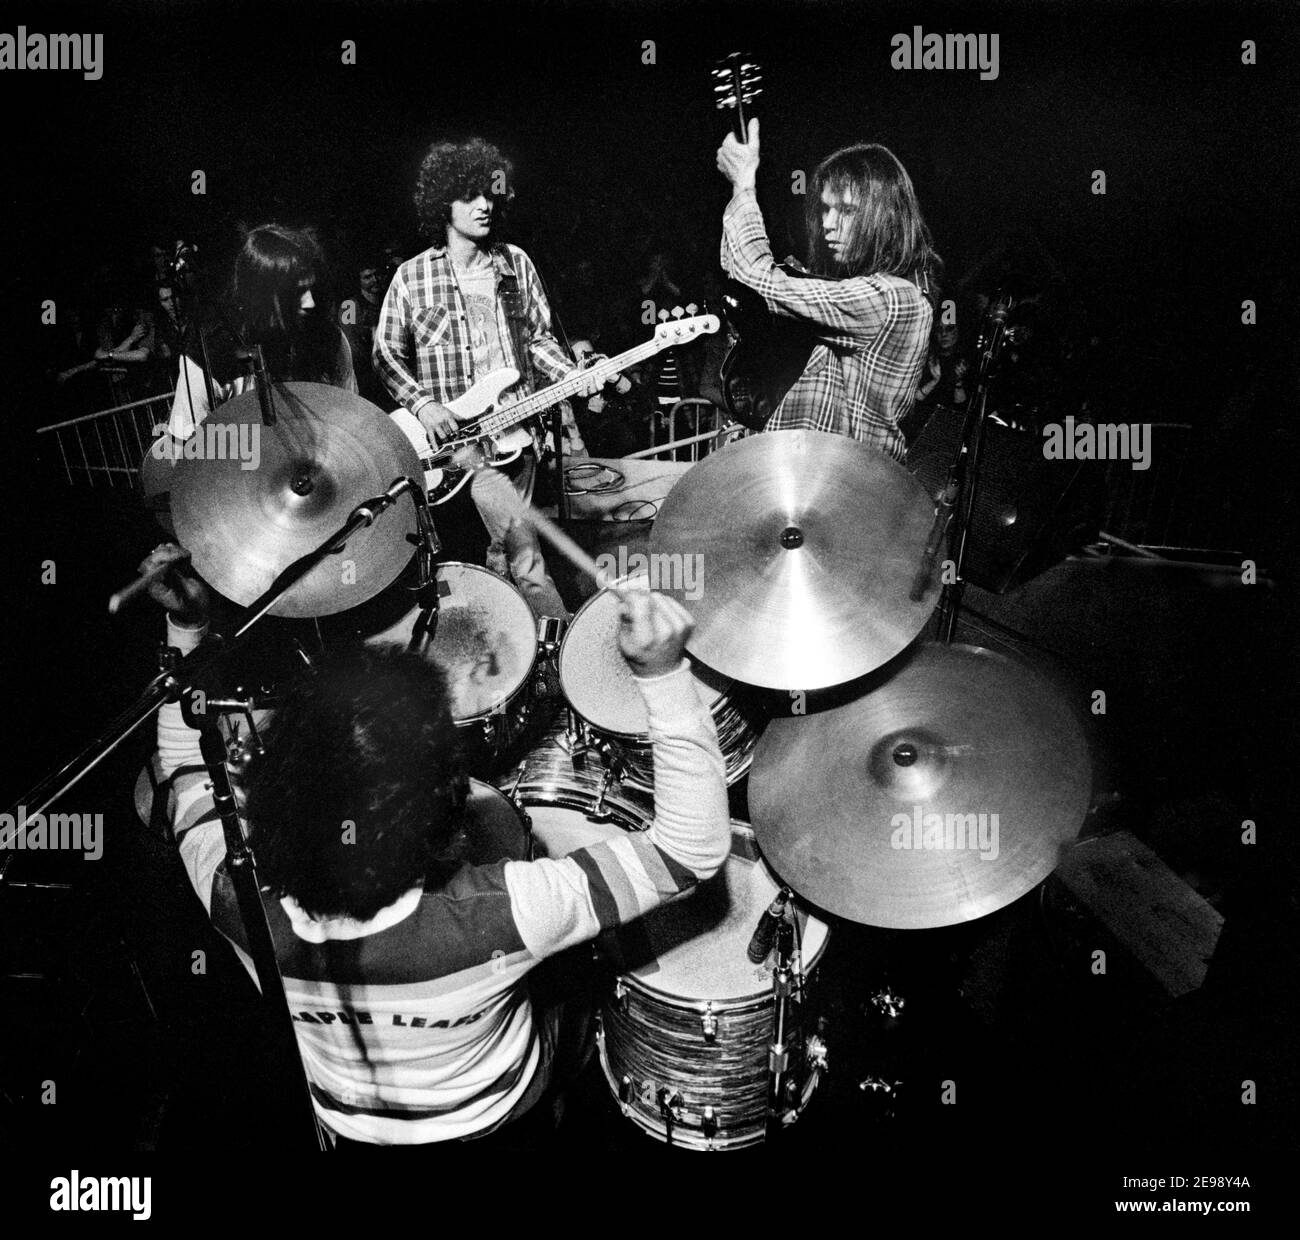 Ahoy Hallen,Rotterdam, 24-03-1976. Neil Young & Crazy Horse, 1976 Tour of Europe & Japan (photo Gijsbert Hanekroot, Amsterdam) Stock Photo